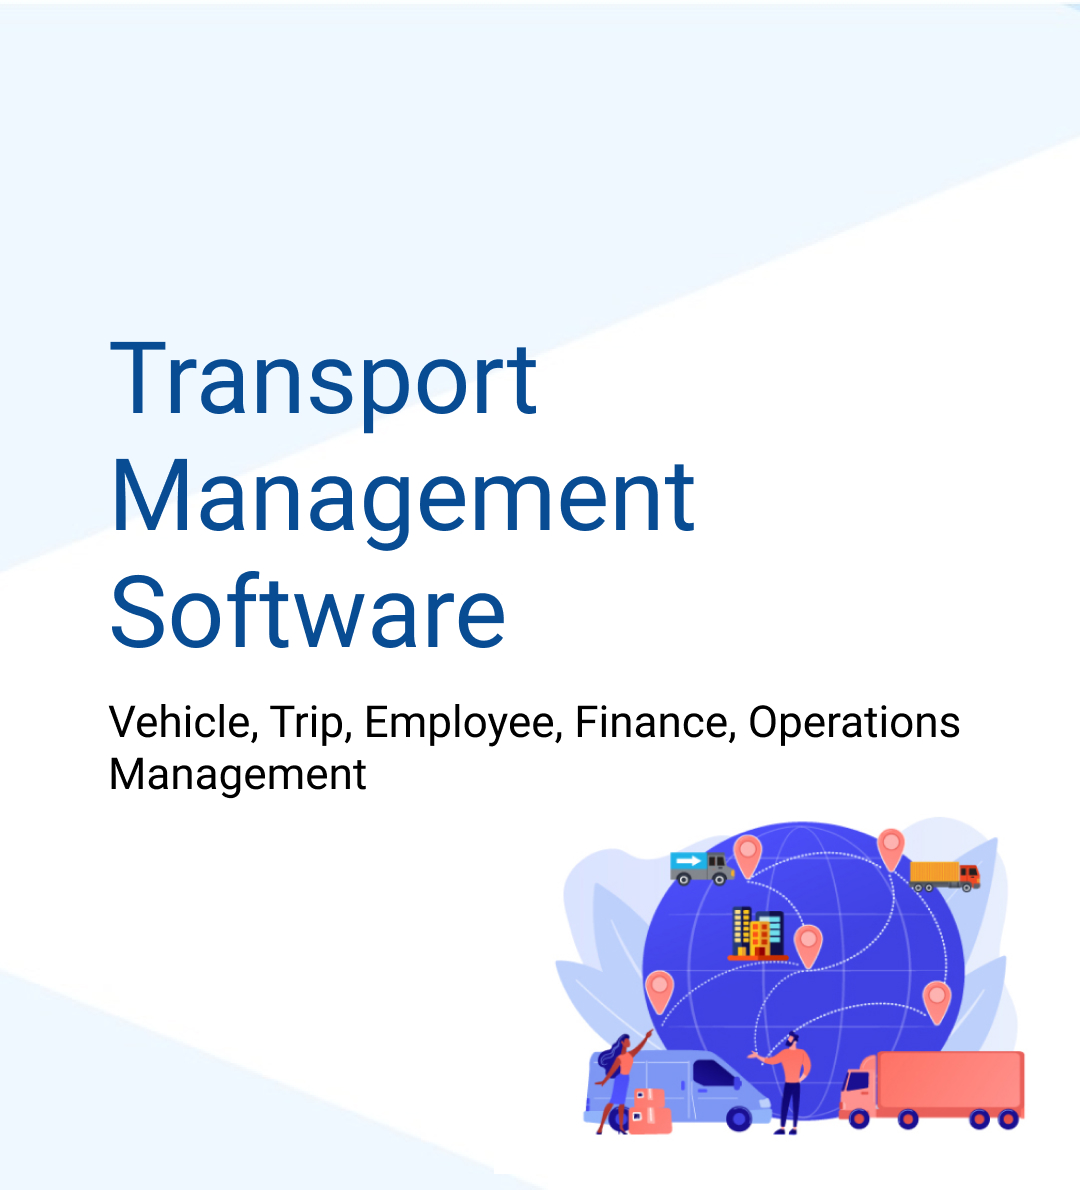 Transport Management
                Software -- Vehicle, Trip, Employee, Finance, Operations Management.